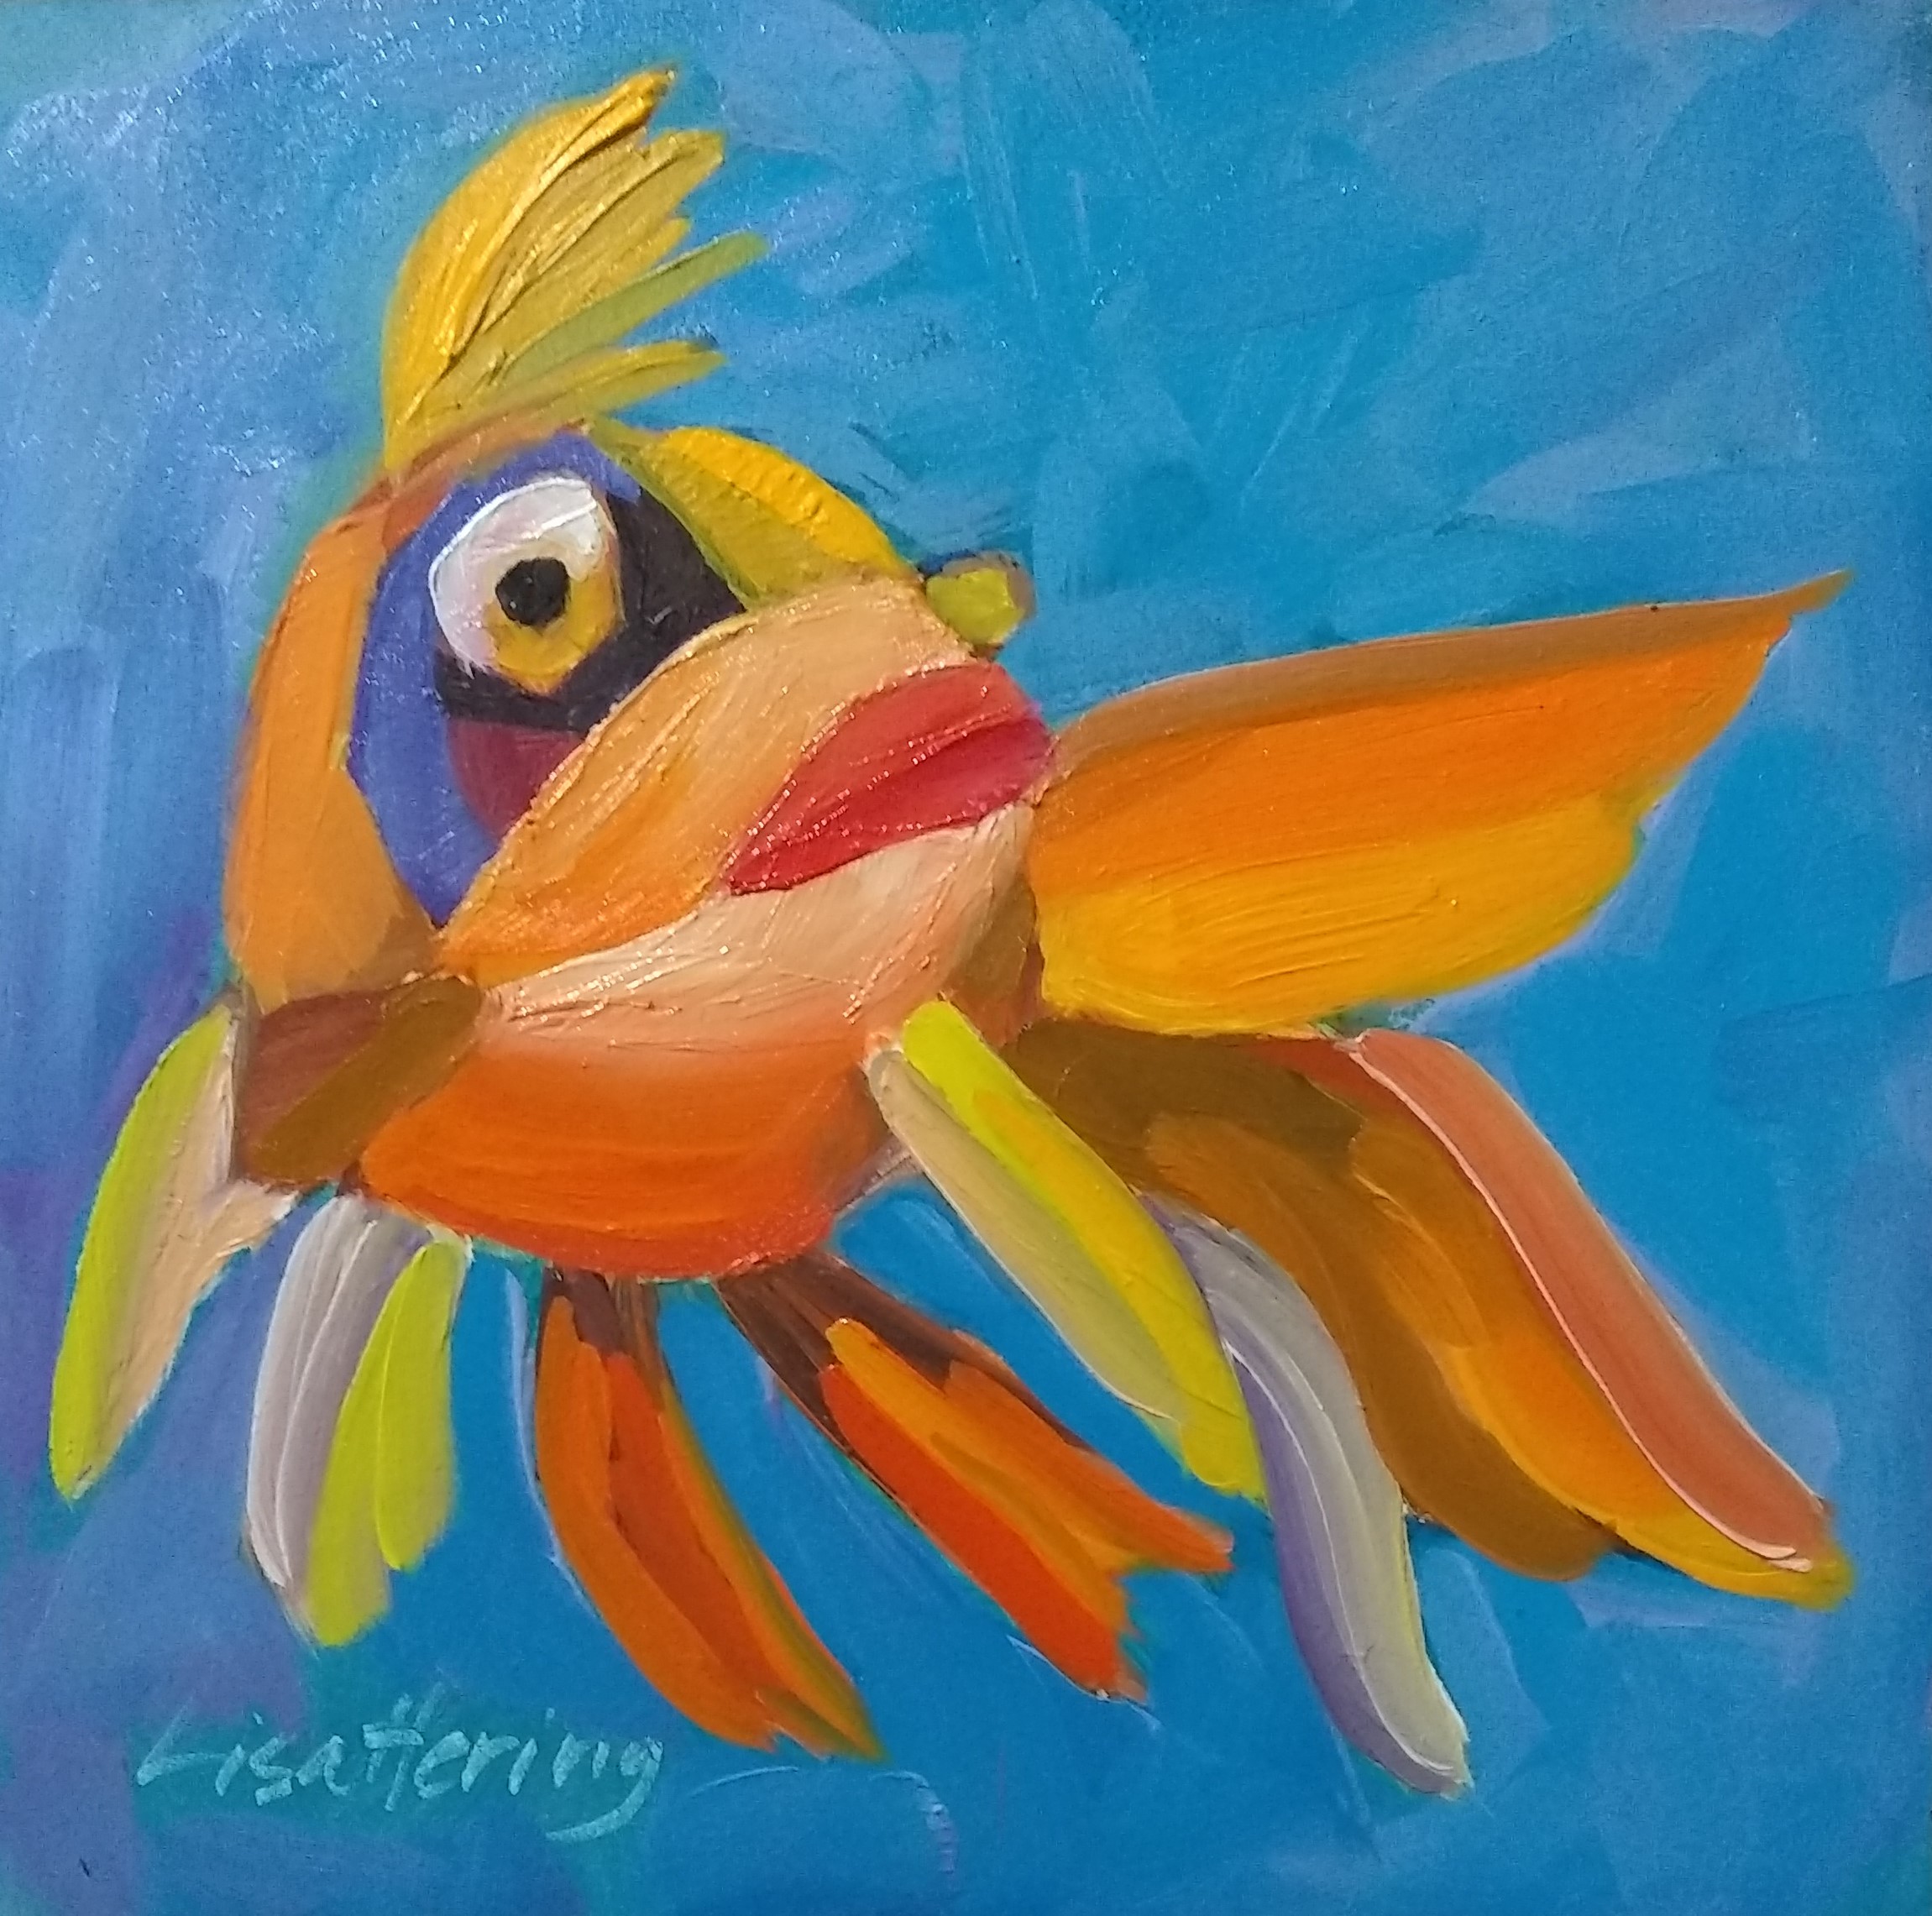 Harold the Fish, 5" x 5", 65 USD, unframed